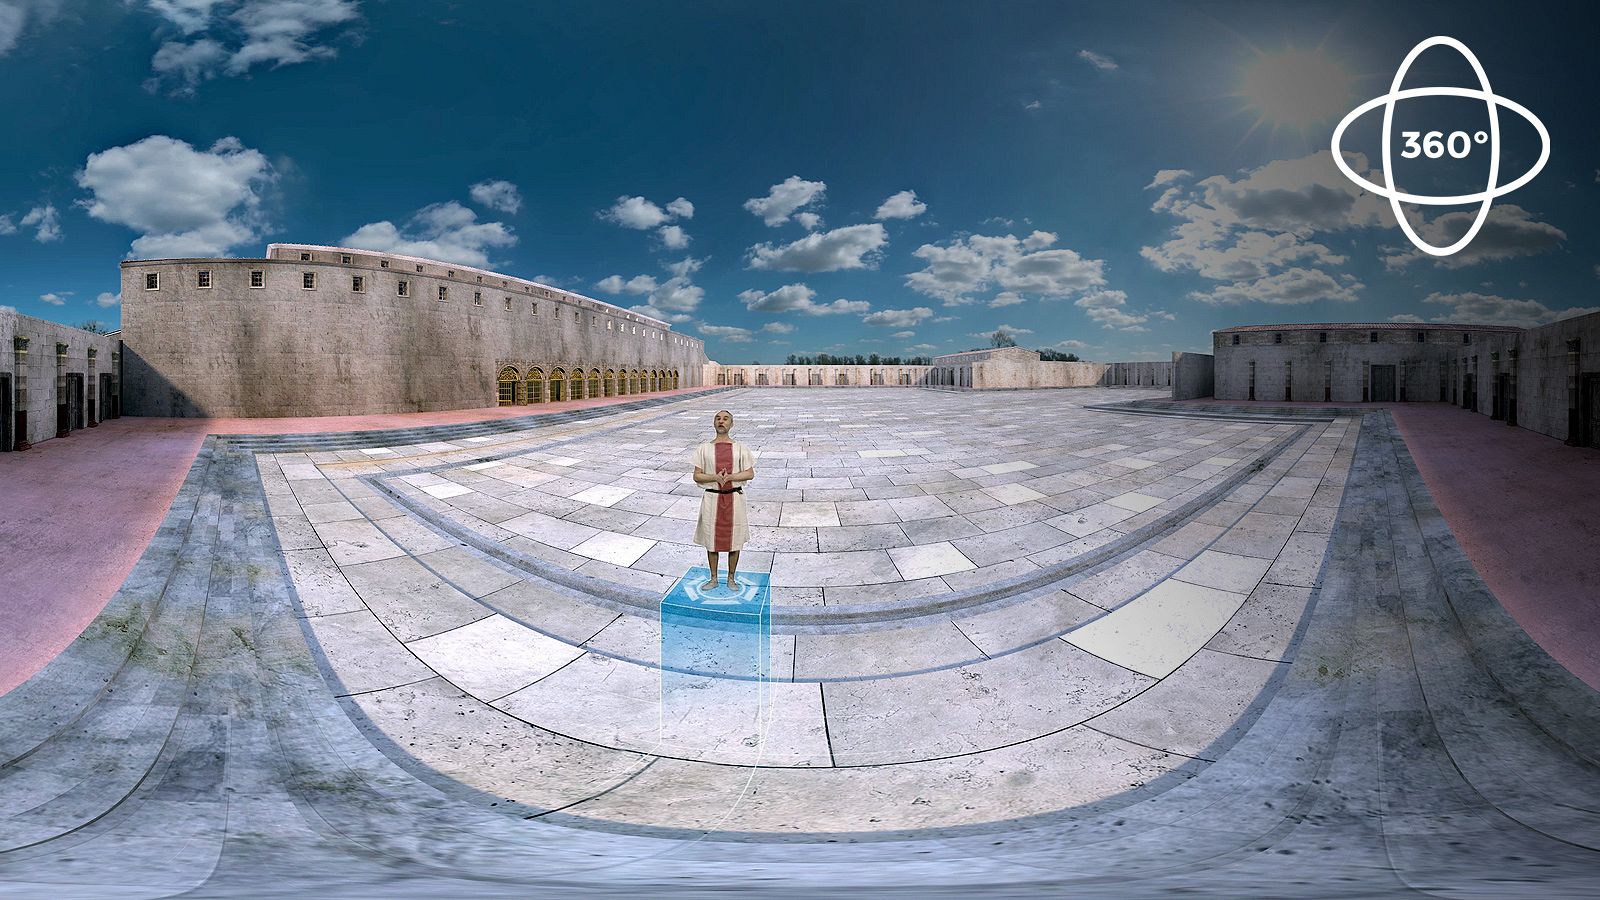 Ingeniería romana 360º: Foro de Caesaraugusta